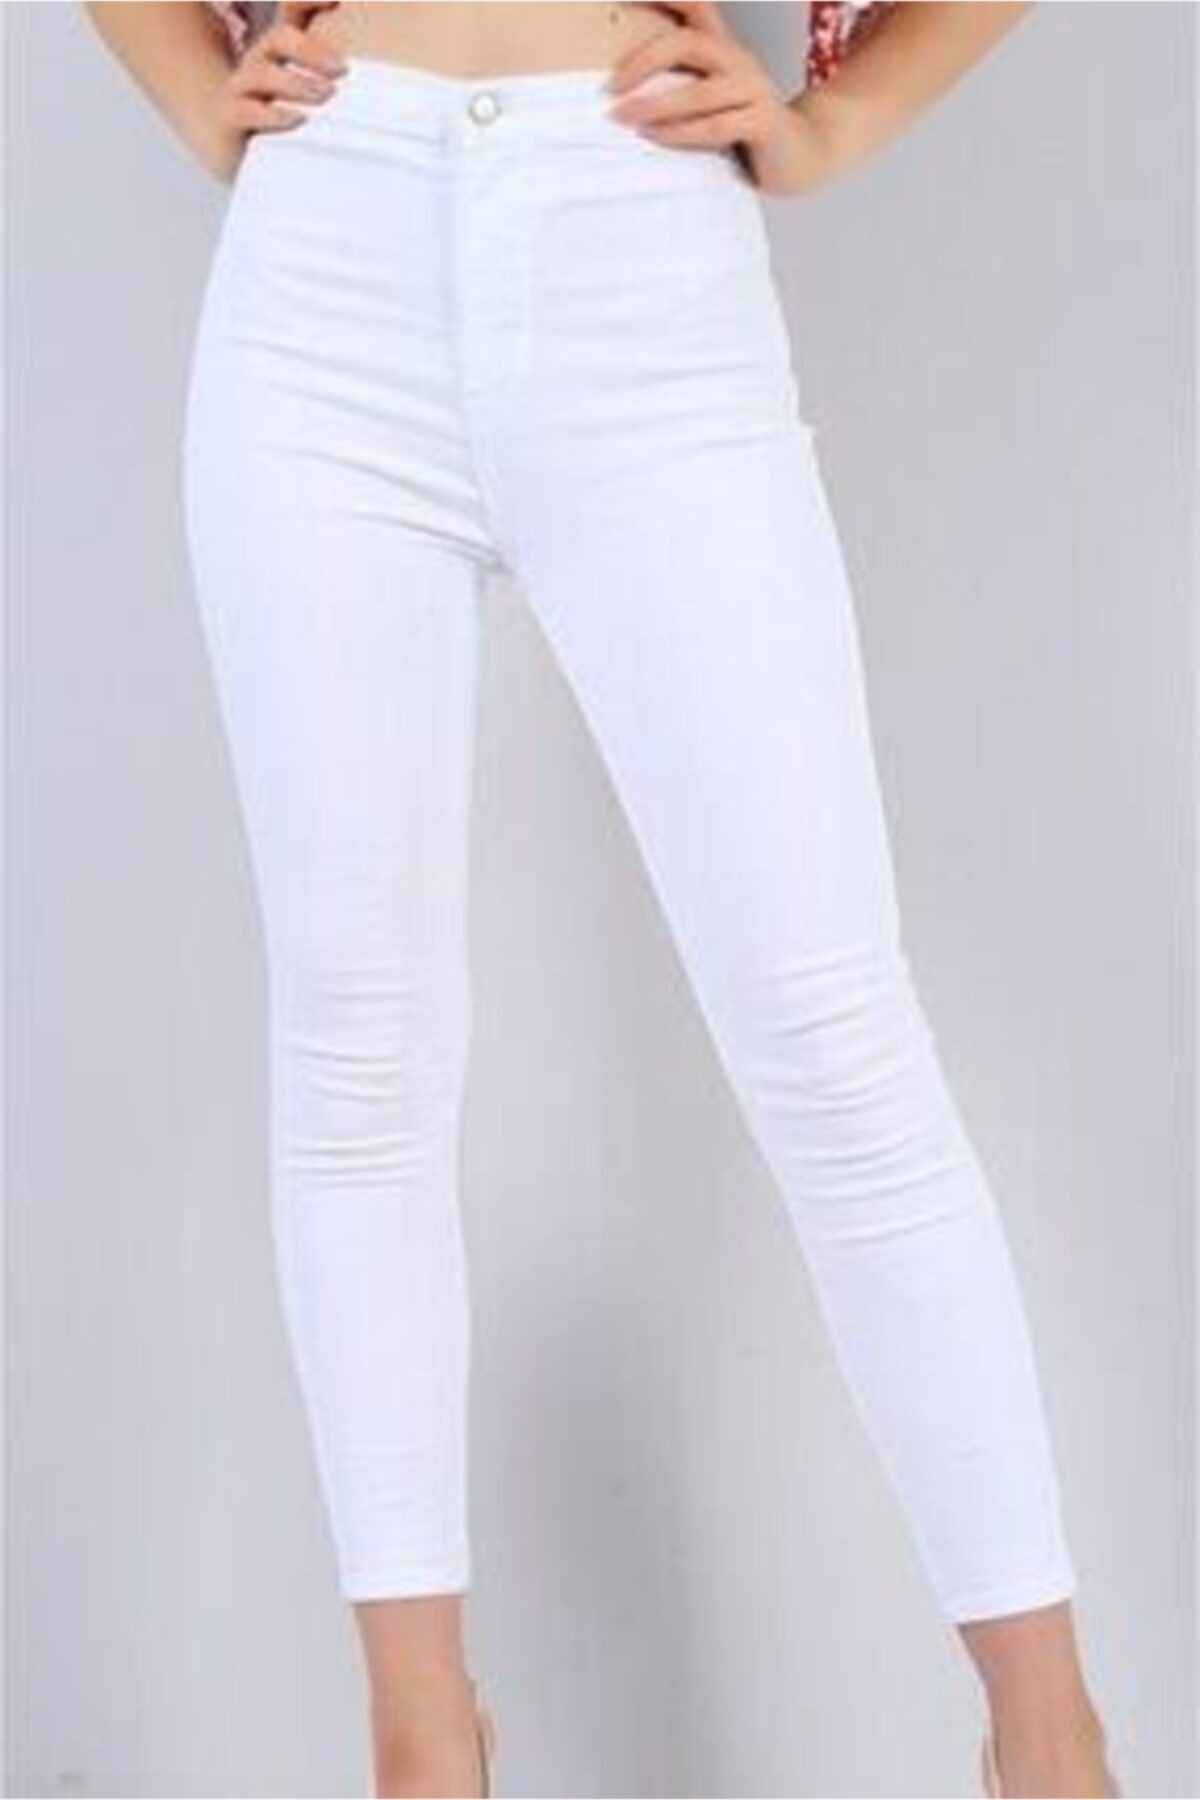 pasha fashion Tayt Modeli Beyaz Yüksek Bel Likrali Pantolon